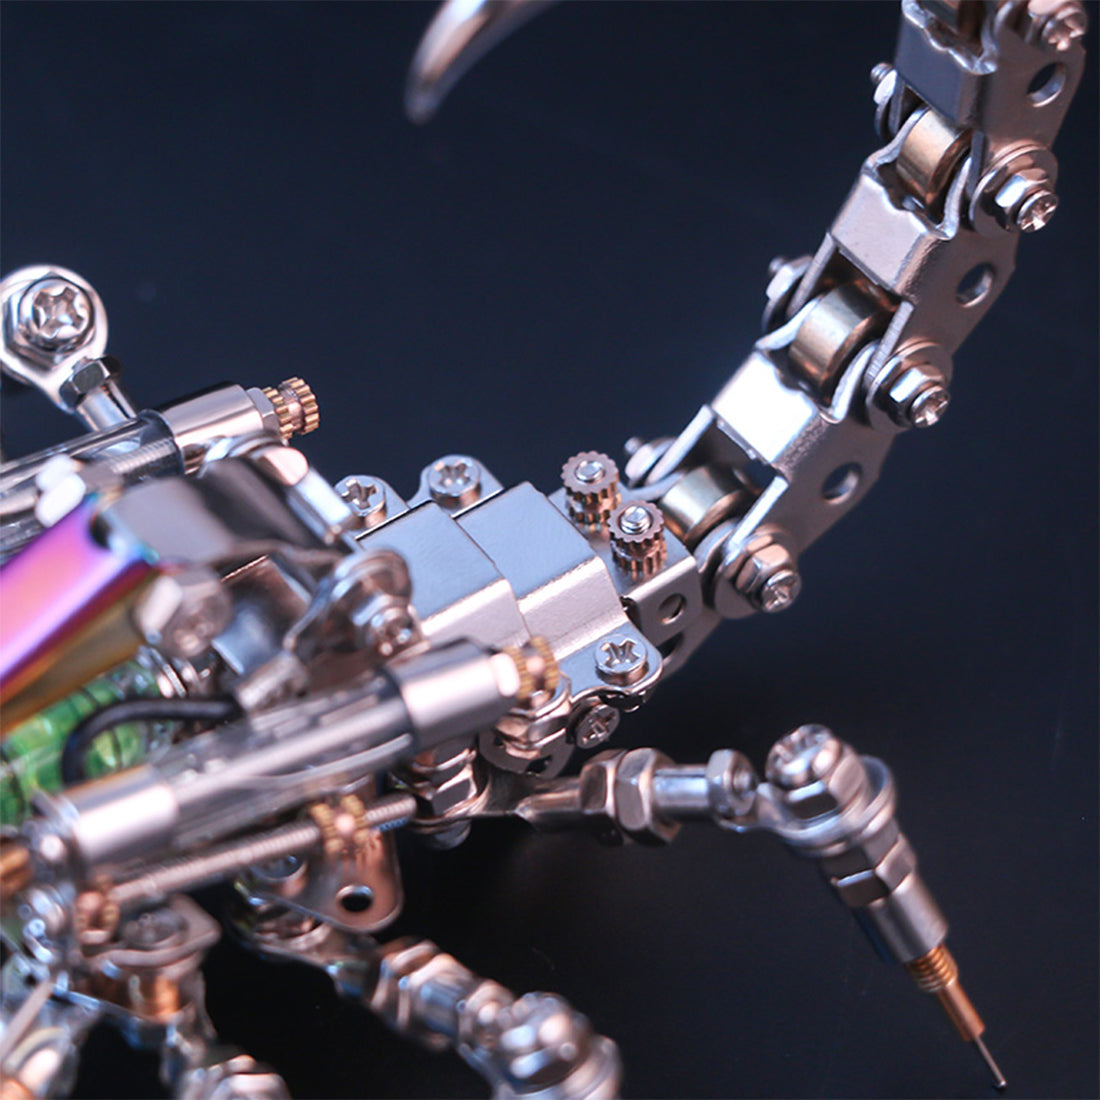 Punk Scorpion King Model DIY 3D Metal Puzzle Metal Kits Pre-order